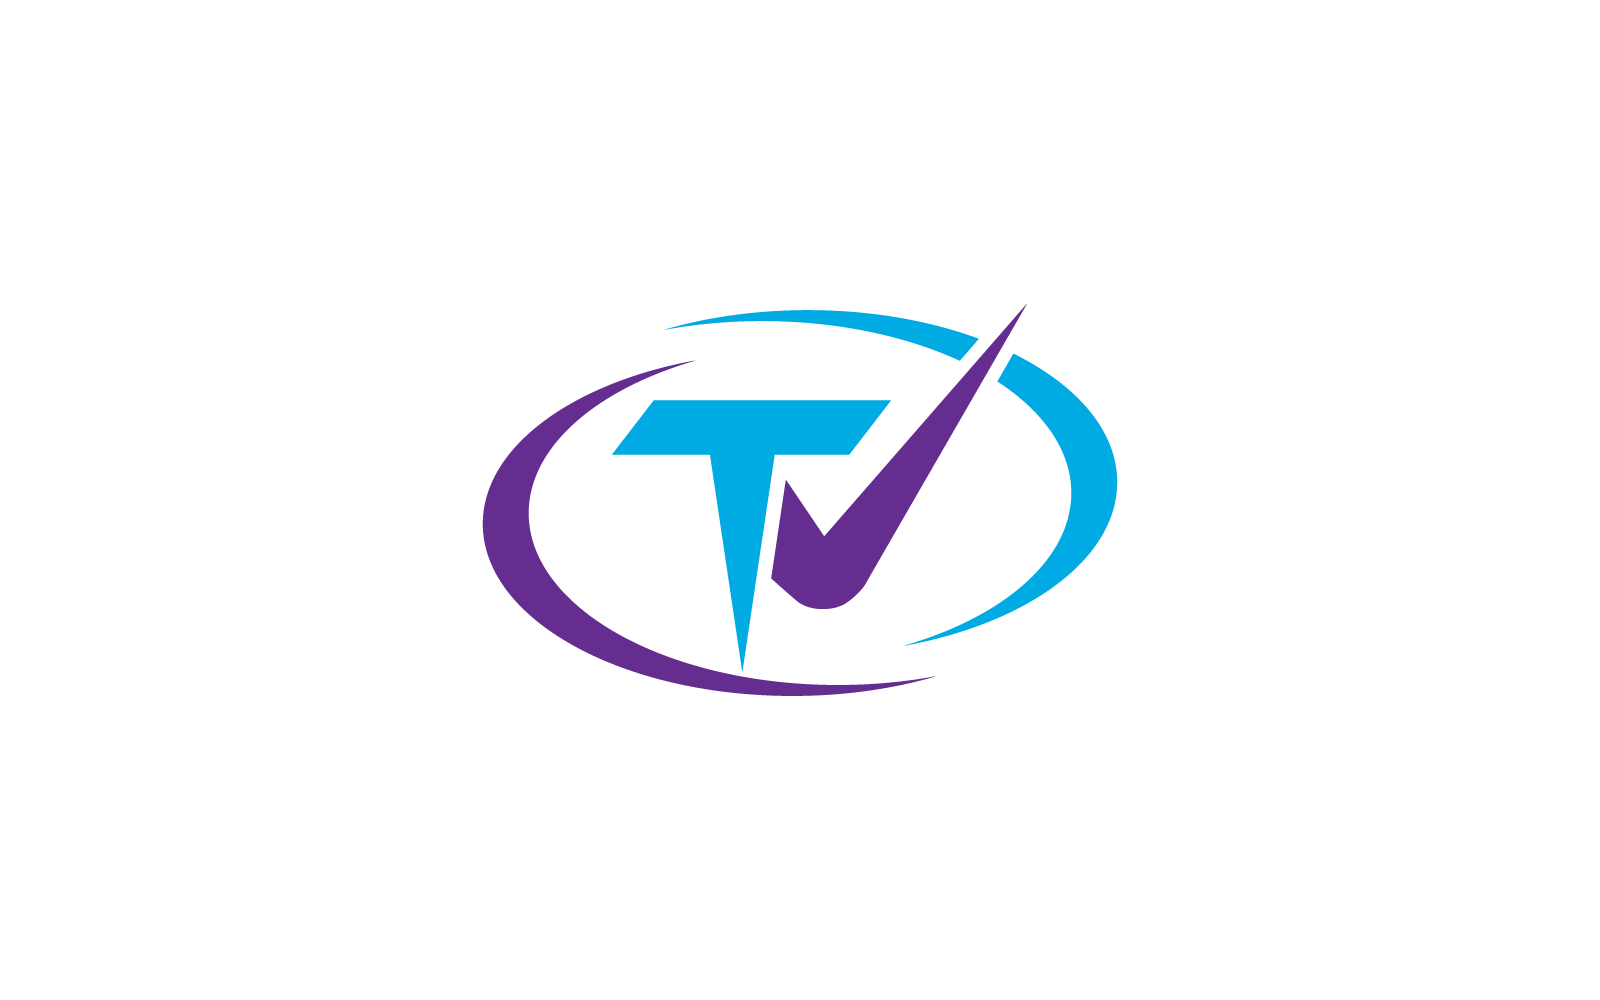 TV logo vector flat design illustration